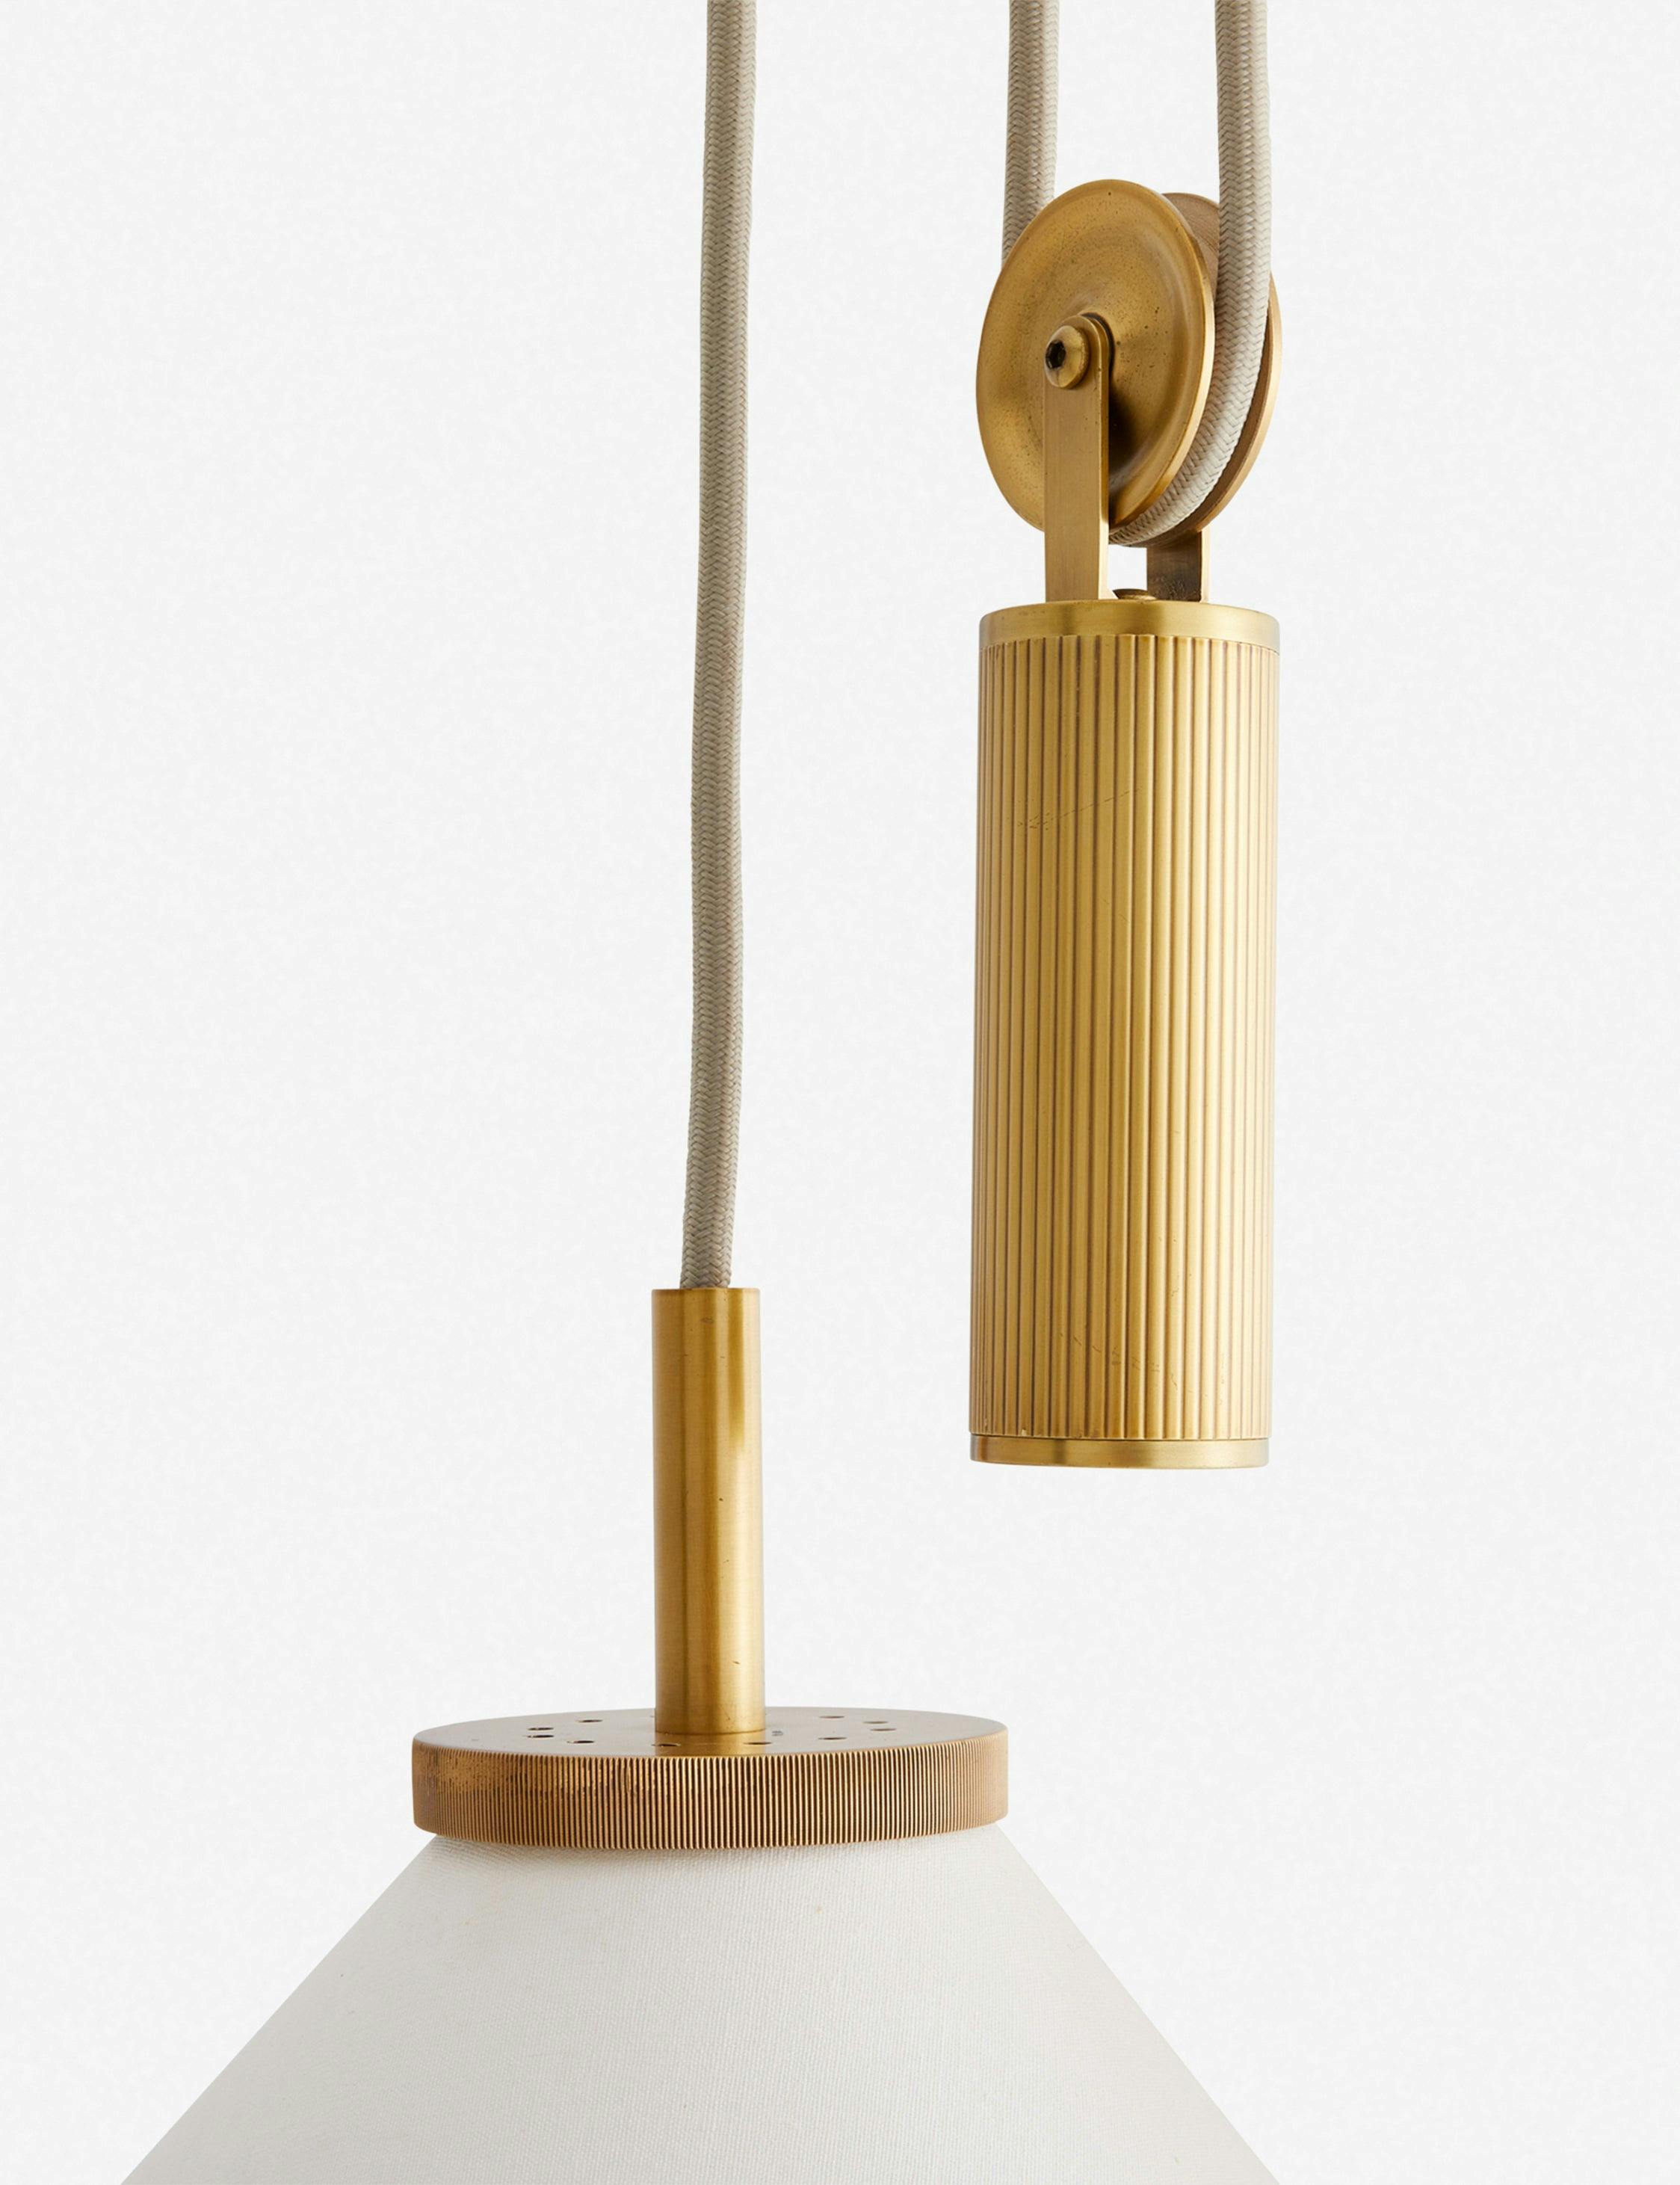 Norfolk Pendant Light by Arteriors - Antique Brass / 20.5" Dia